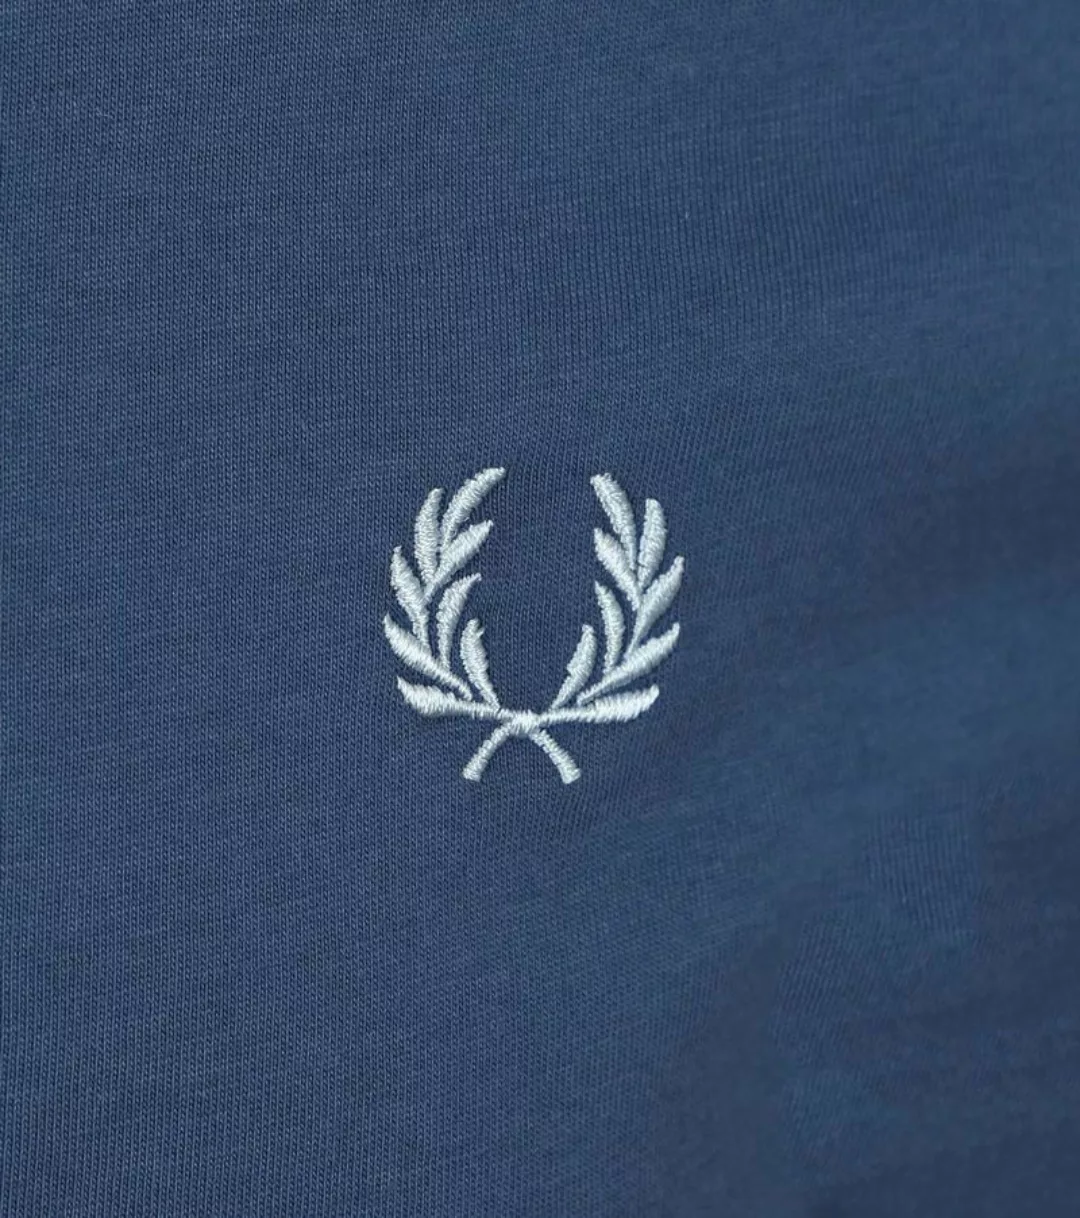 Fred Perry T-Shirt Ringer M3519 Blau V06 - Größe L günstig online kaufen